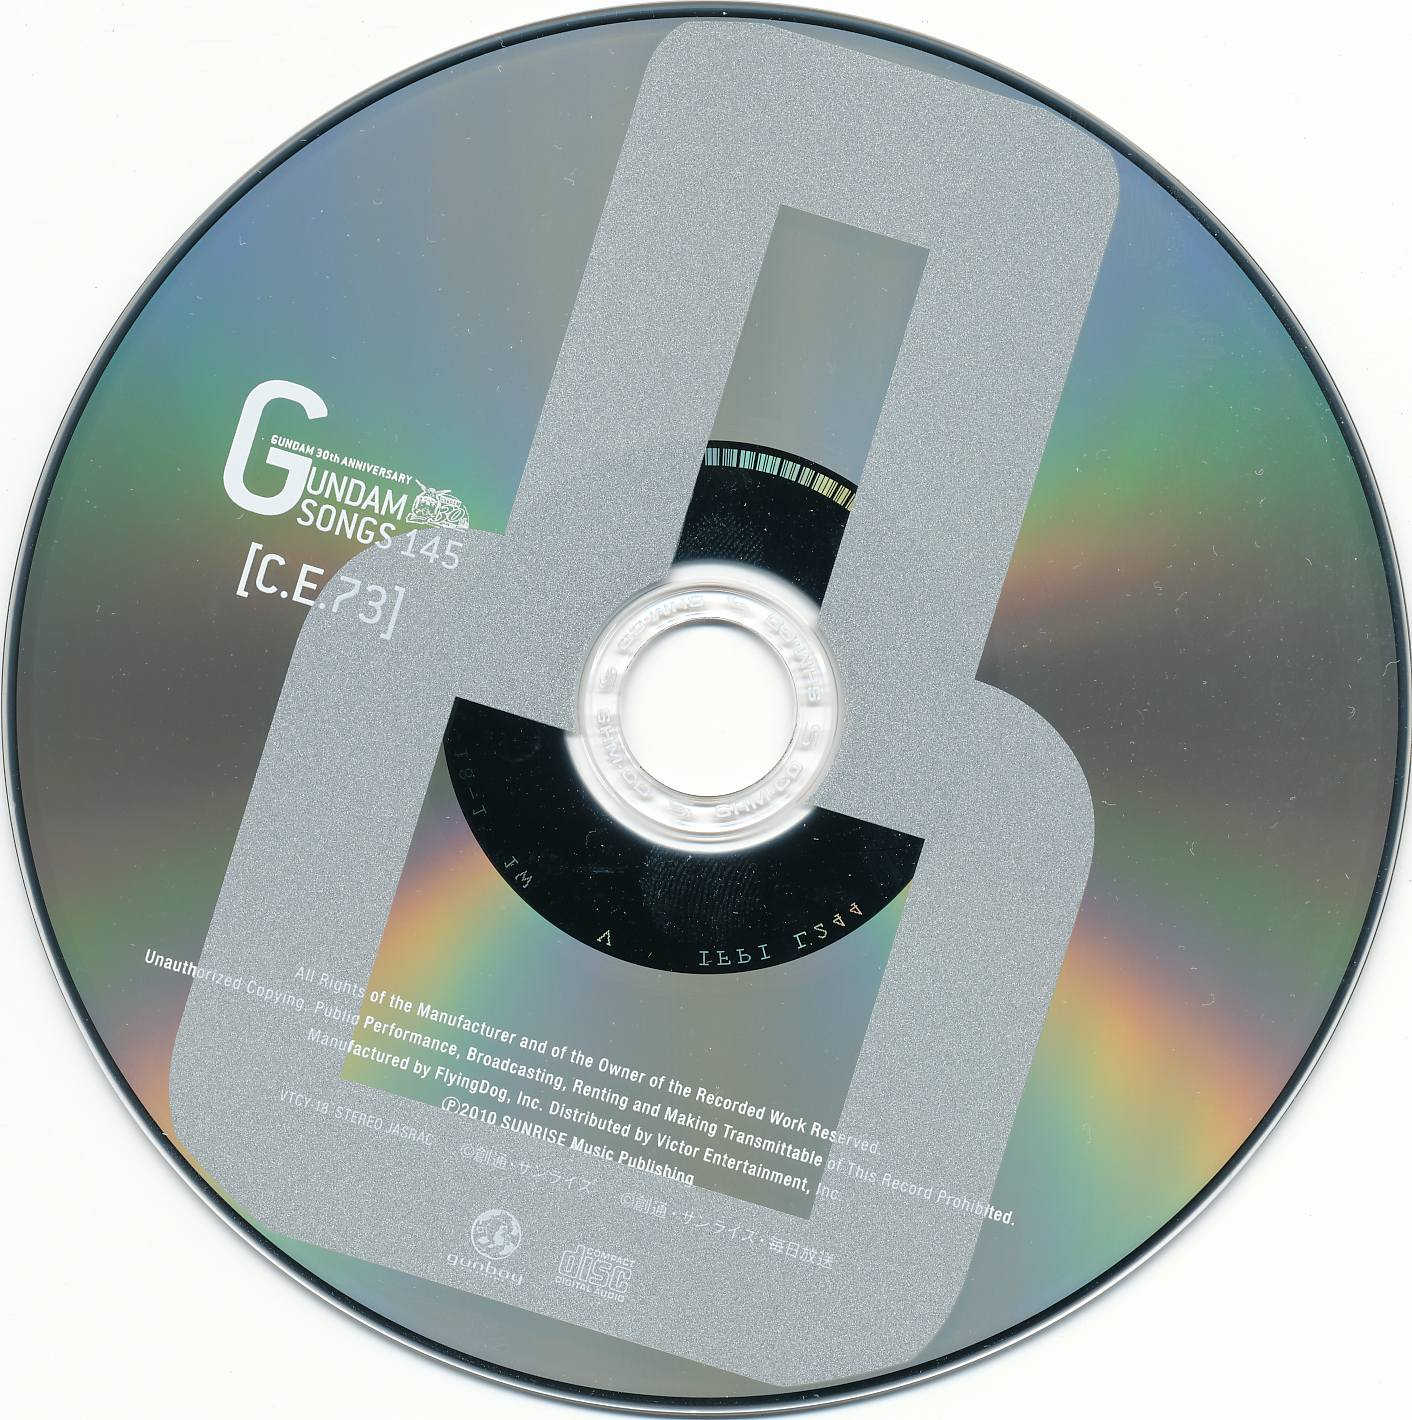 Release “GUNDAM 30th ANNIVERSARY GUNDAM SONGS 145” by Various